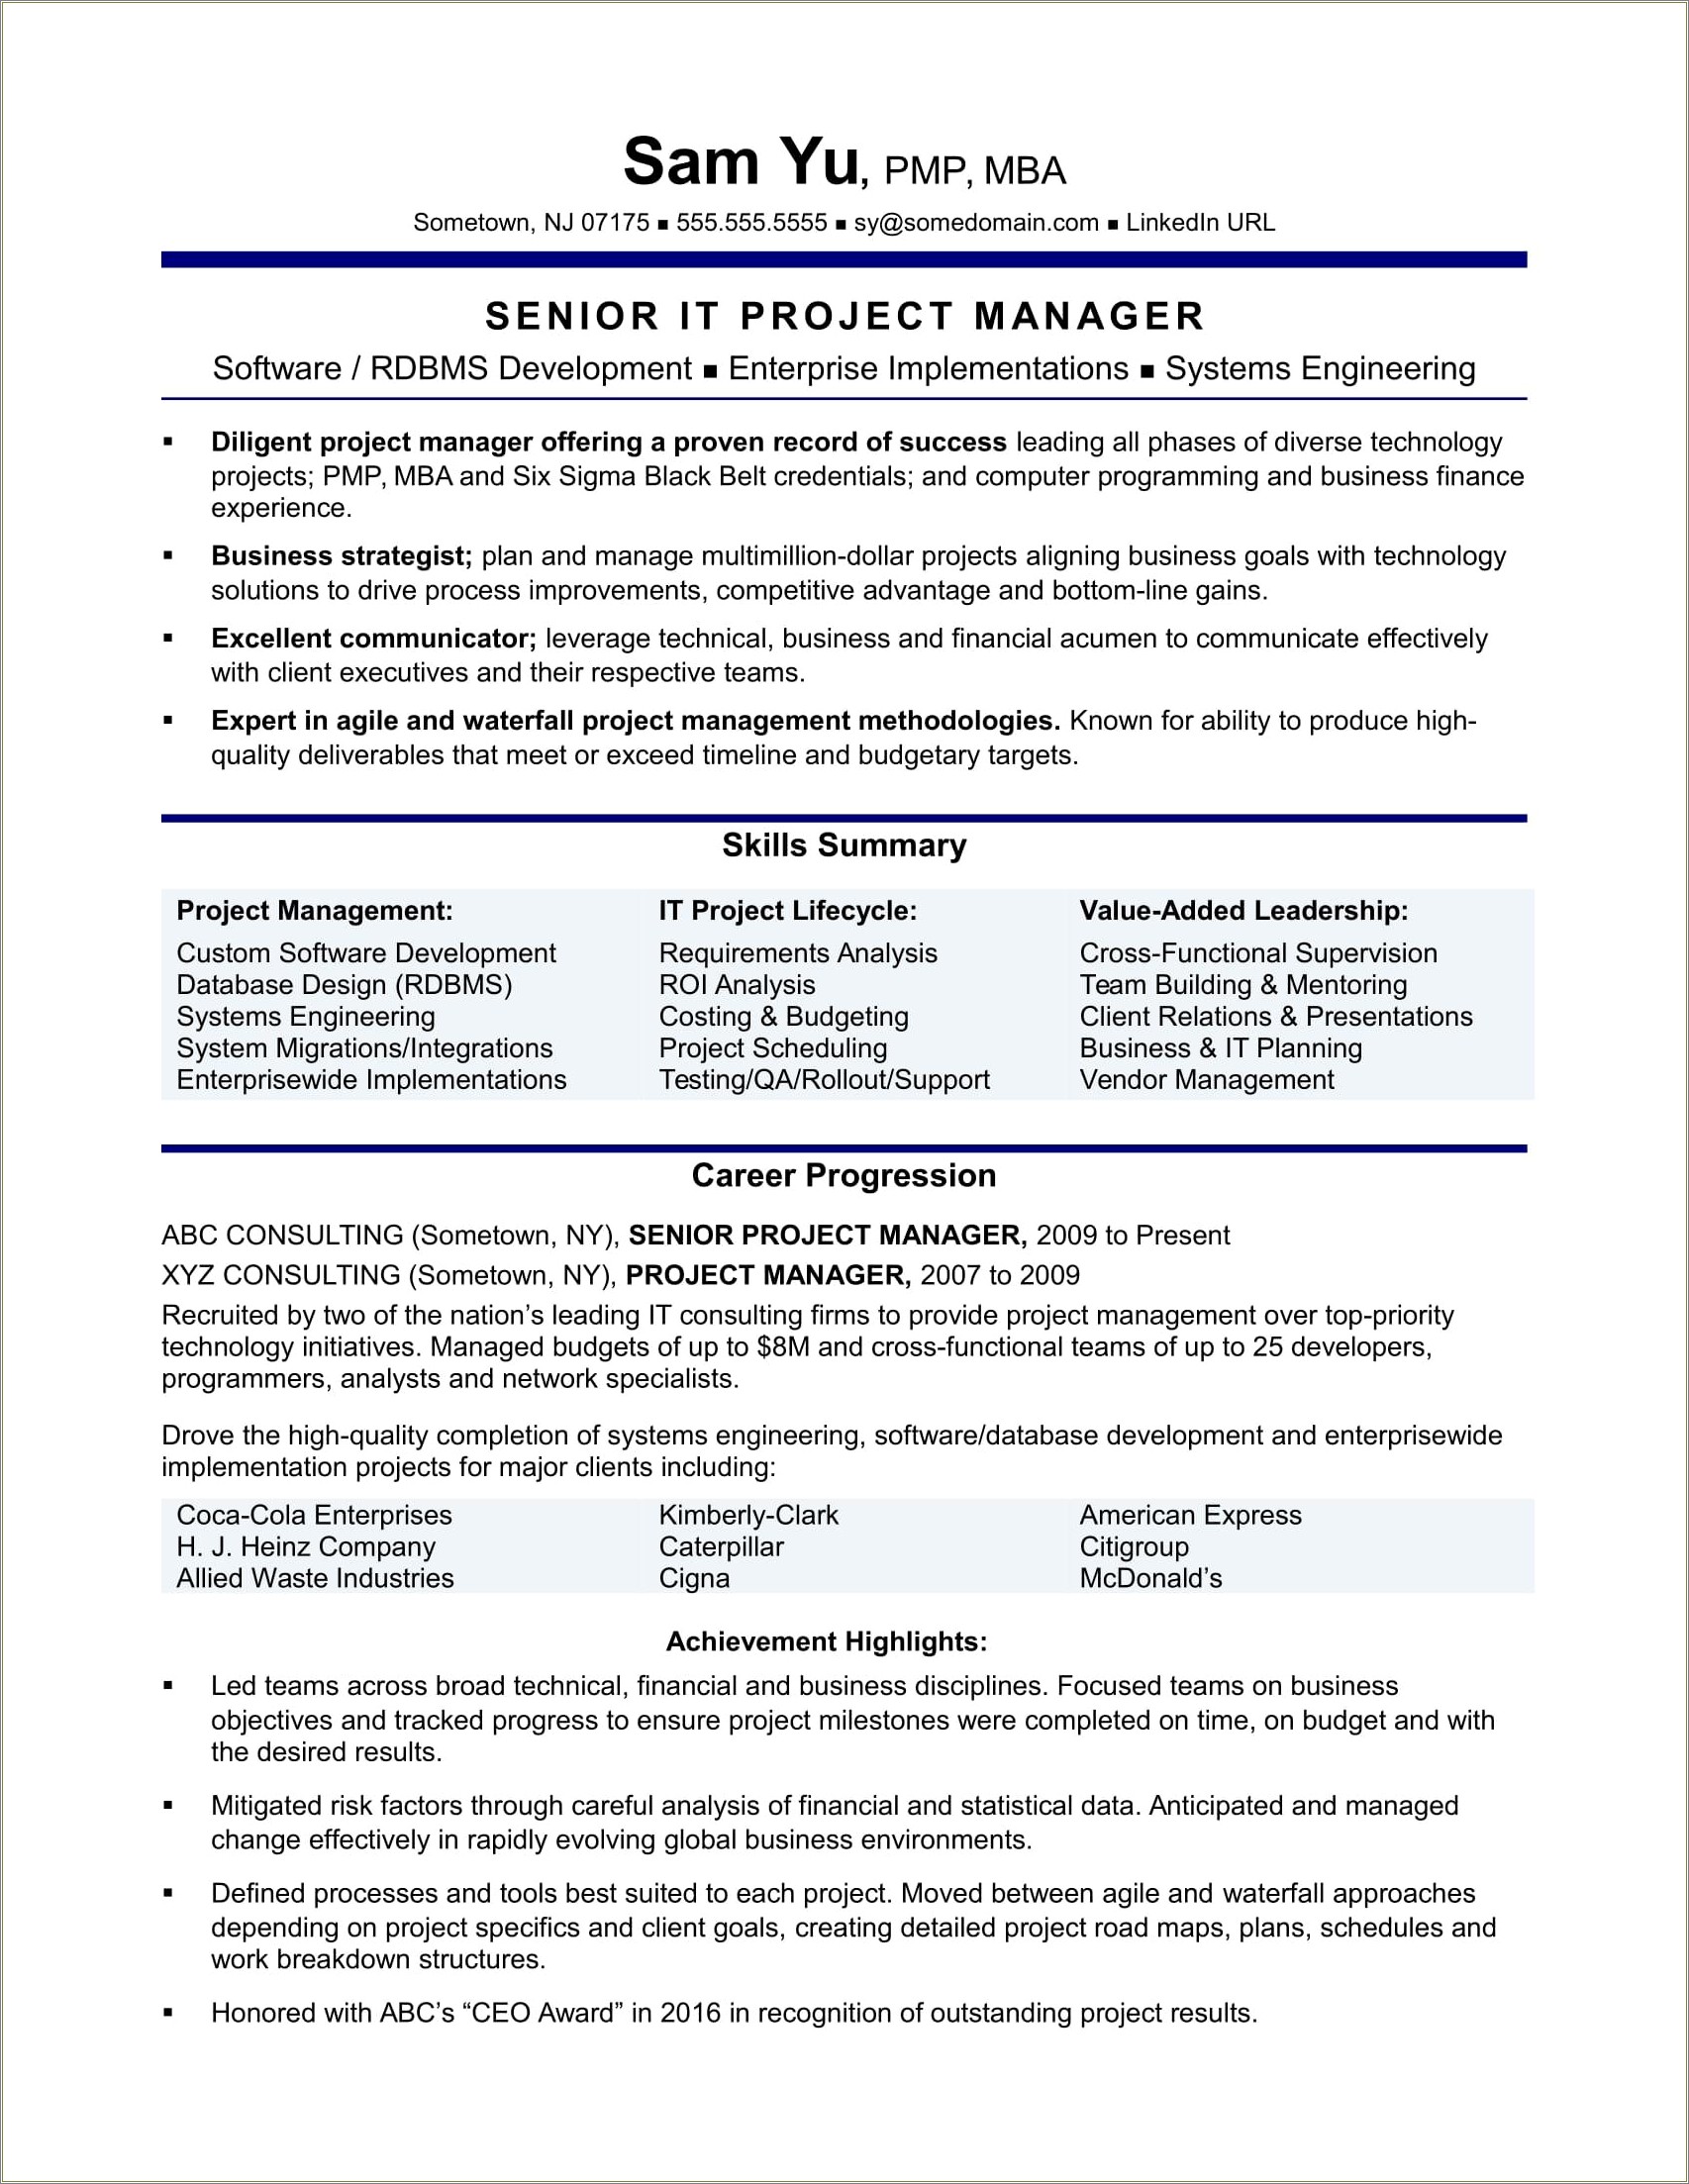 Control Systems Engineering Executive Summary Resume